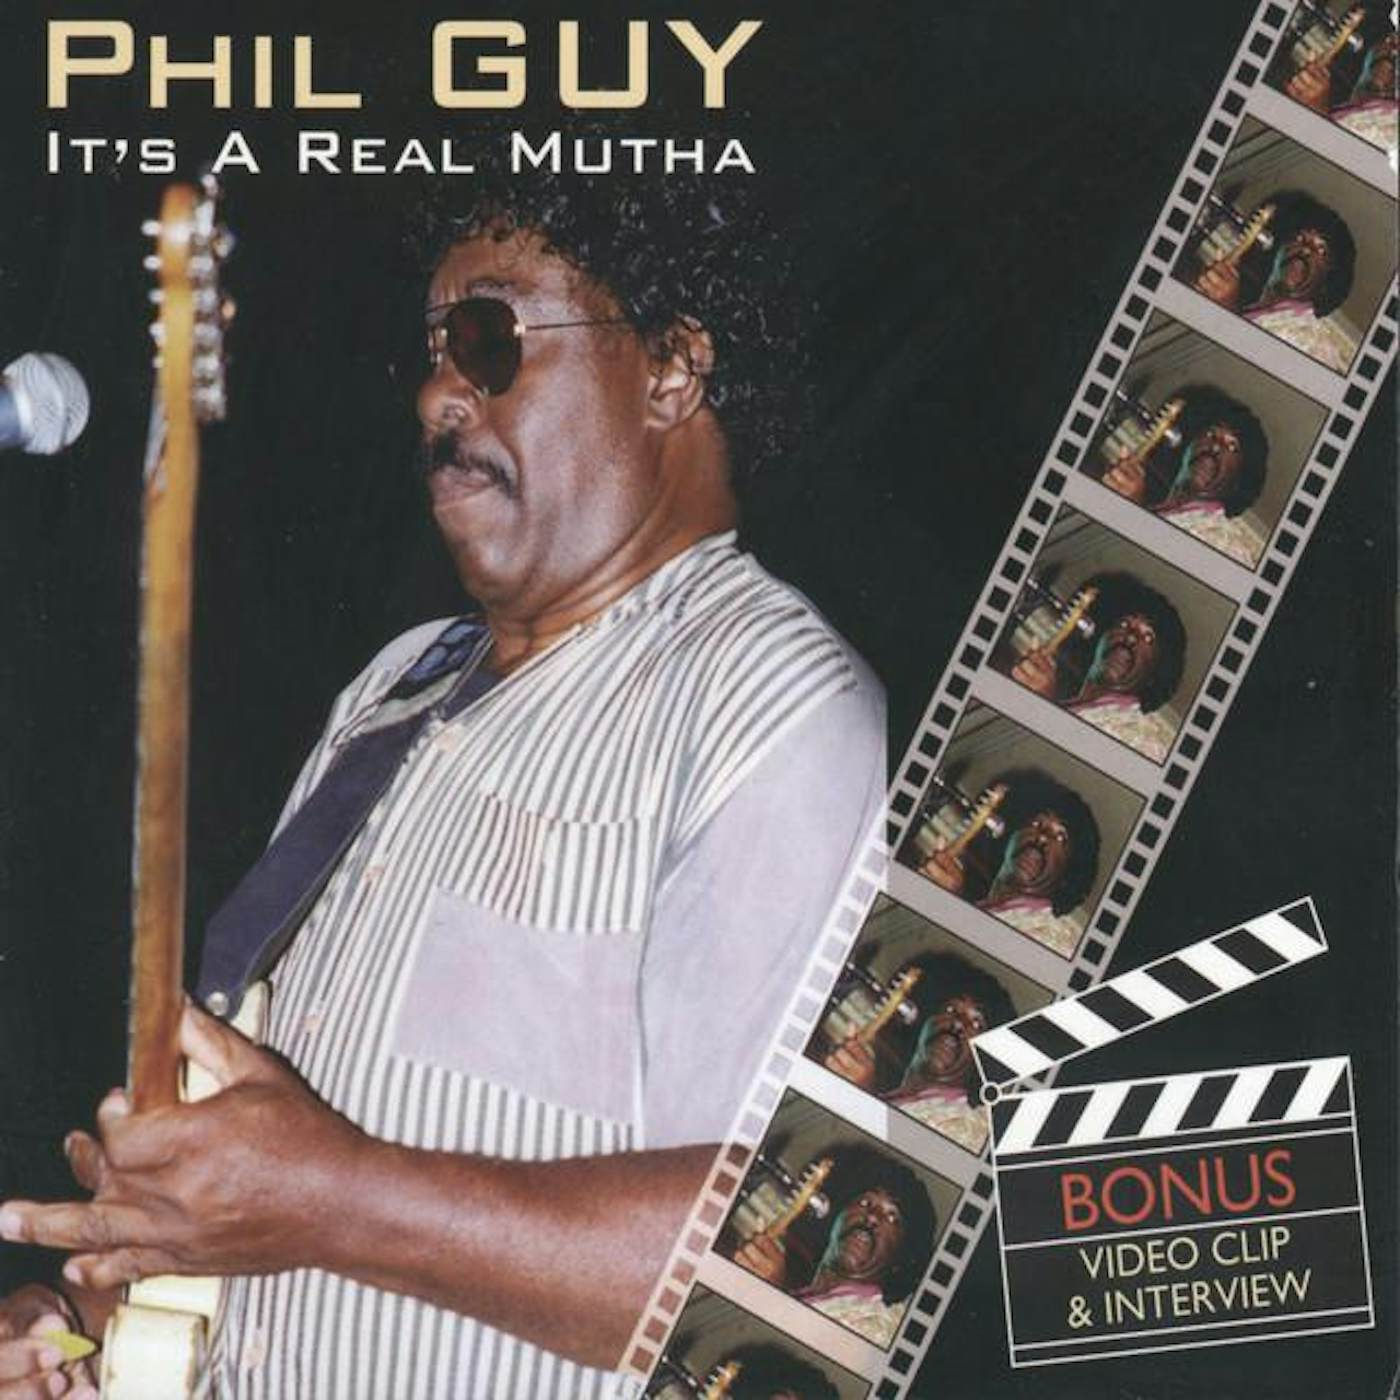 Phil Guy